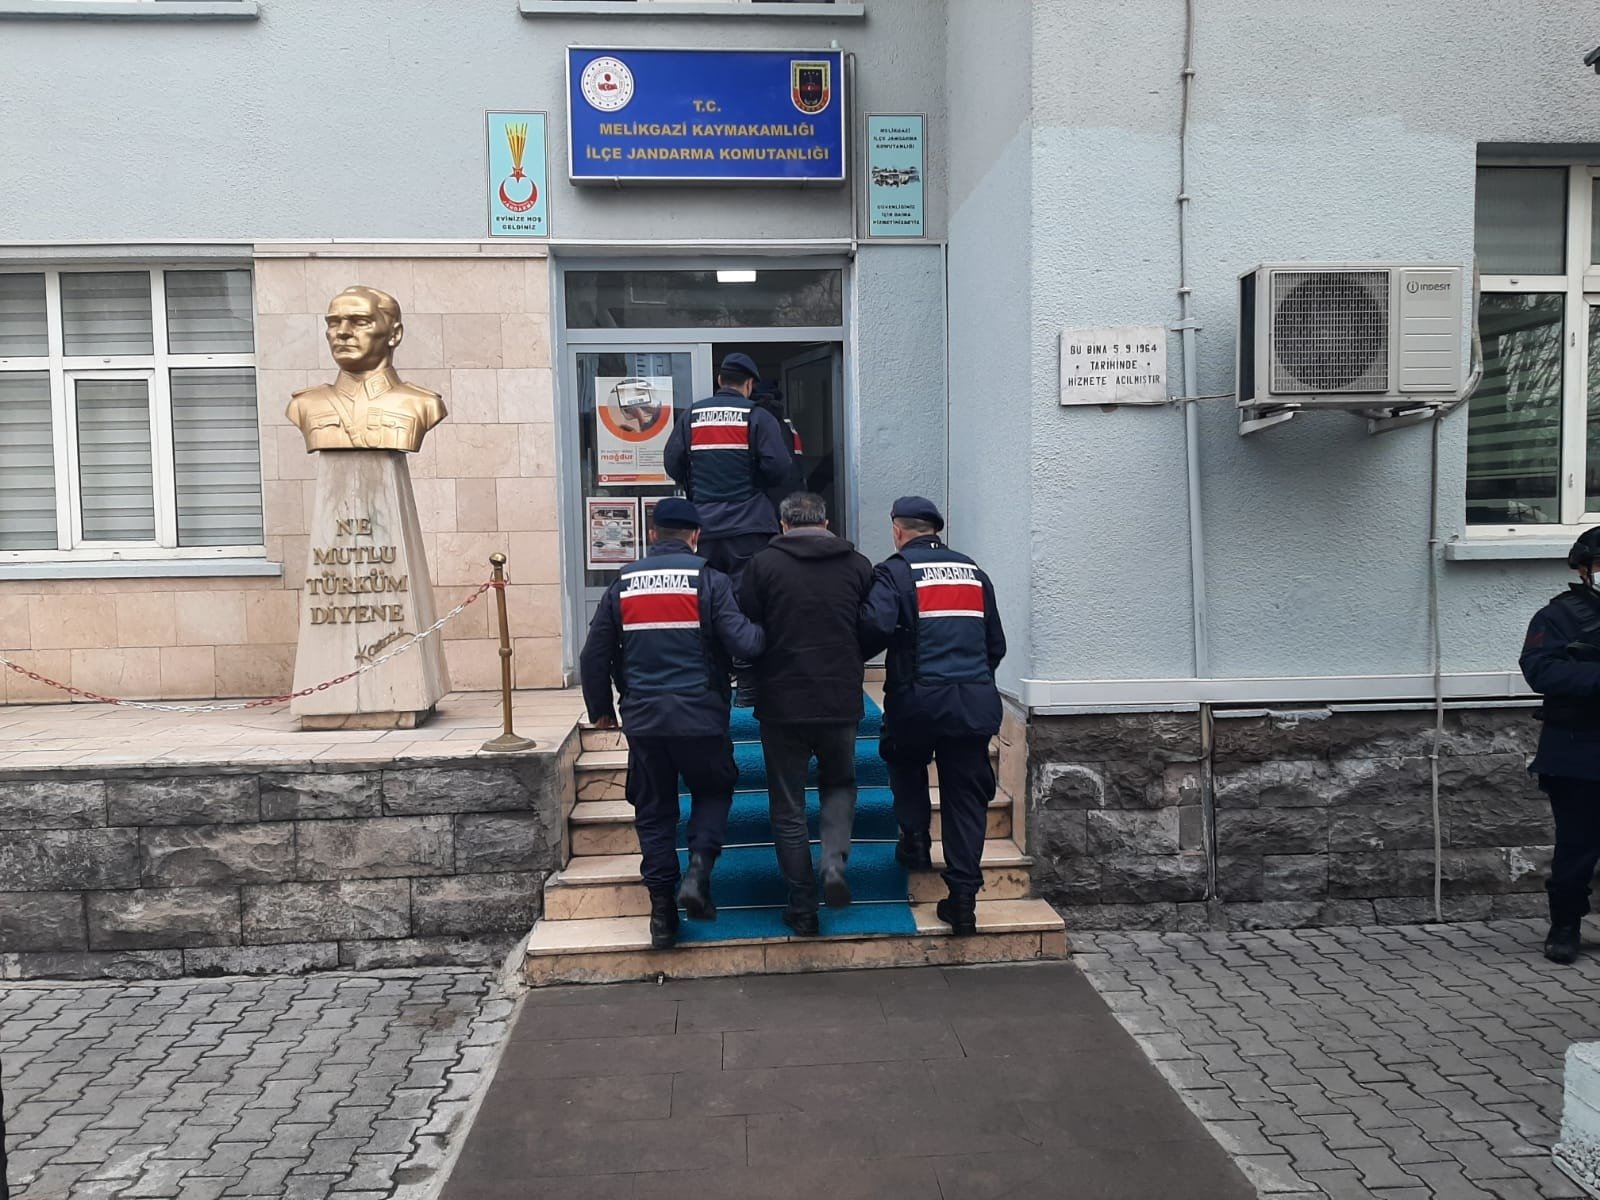 Gendarmerie officers escort a captured FETÖ suspect in Kayseri, central Turkey, Feb. 1, 2022. (İHA PHOTO)